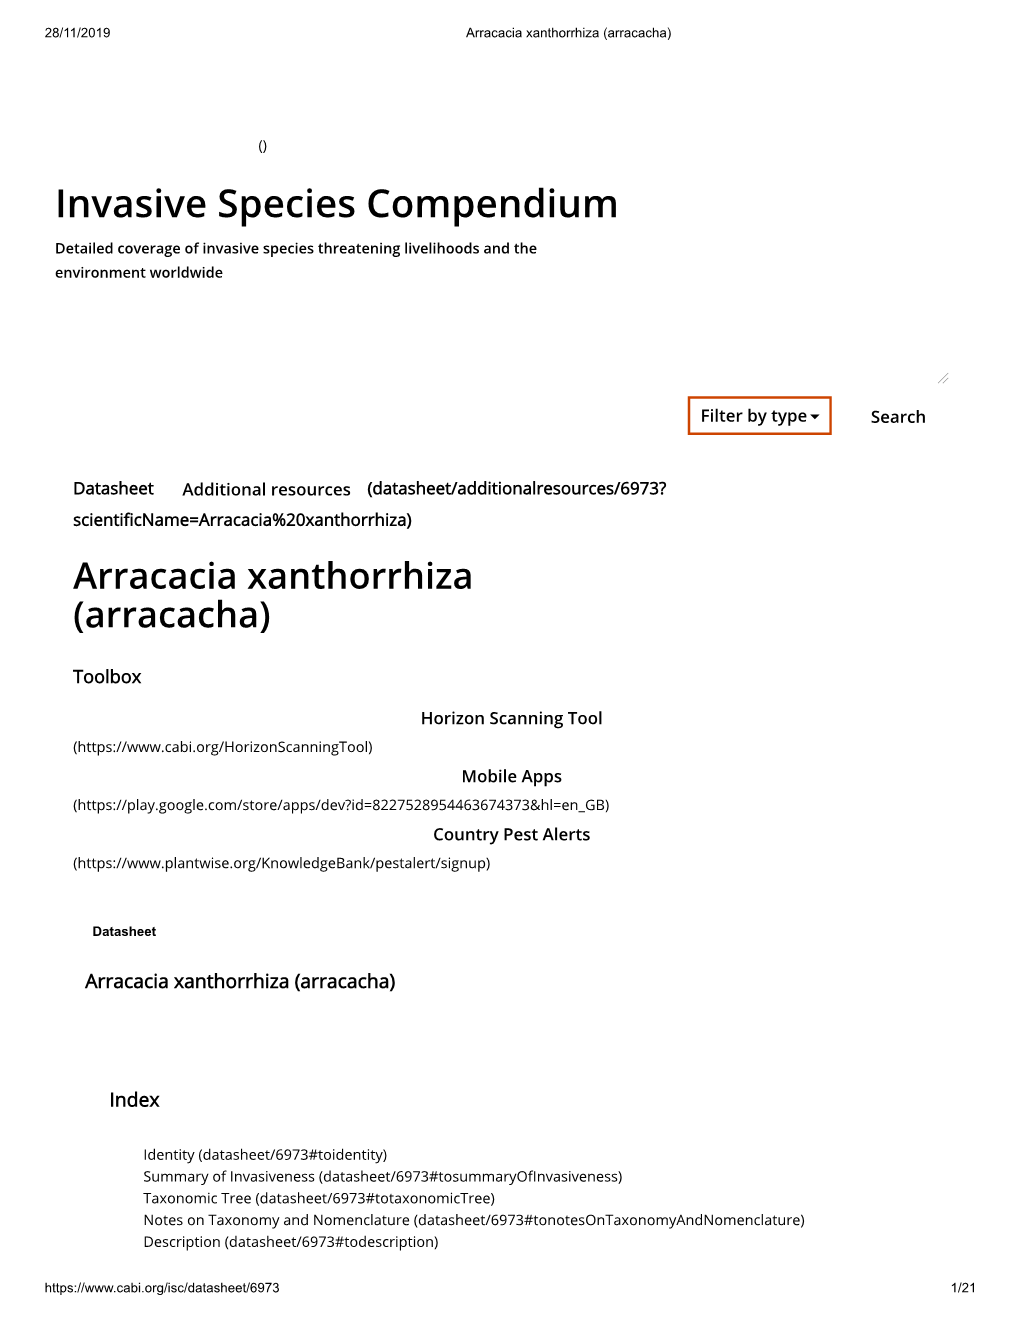 Invasive Species Compendium Detailed Coverage of Invasive Species Threatening Livelihoods and the Environment Worldwide